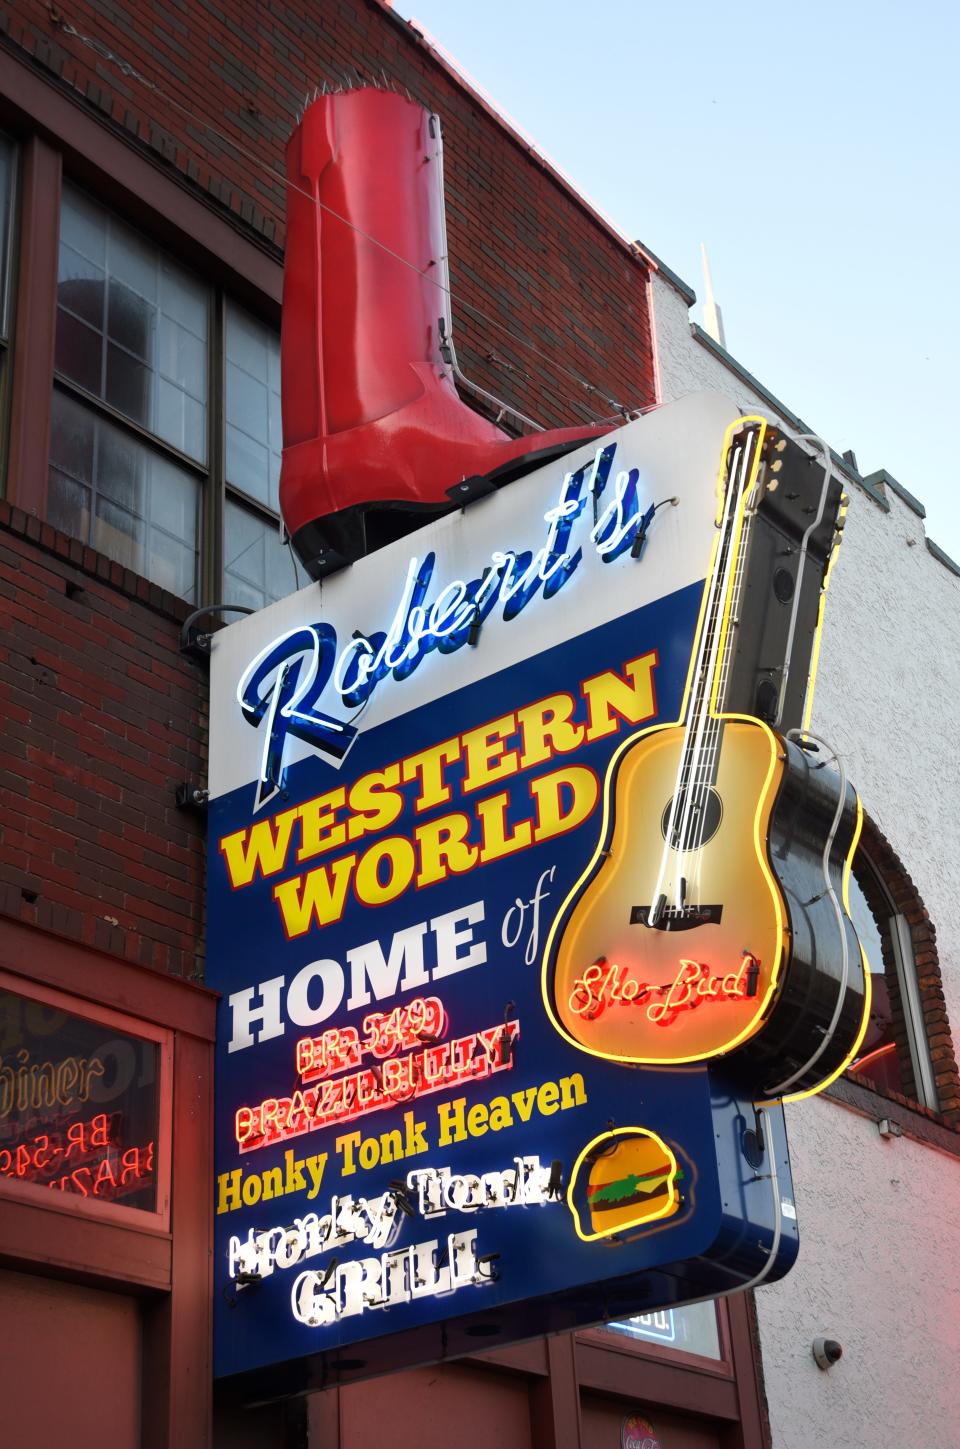 Robert's Western World on Broadway in Nashville.